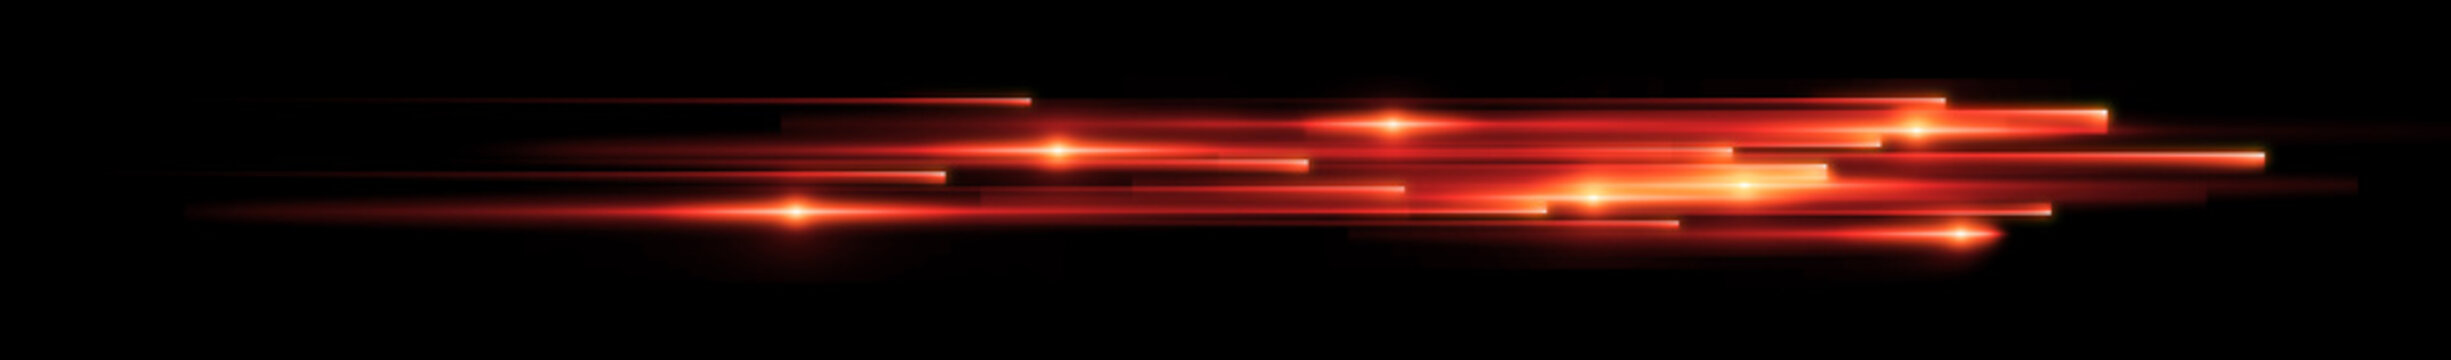 Dynamic lights shape on dark background. High speed optical fiber concept. 3d rendering